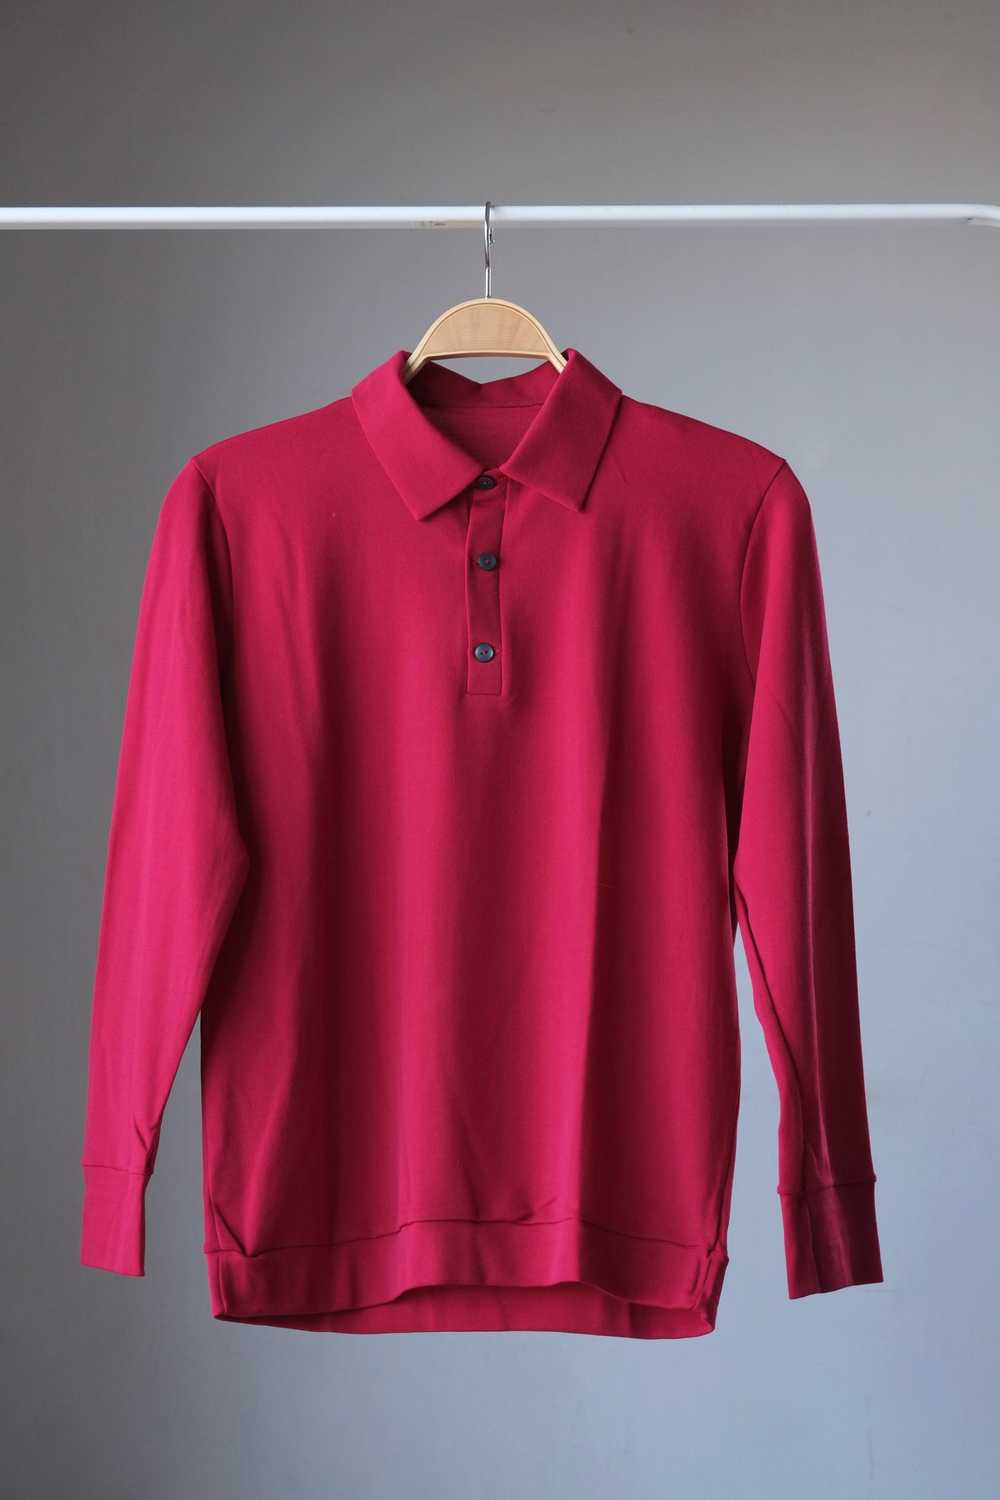 ZOFINA Long Sleeves 70s Polo Shirt - image 5